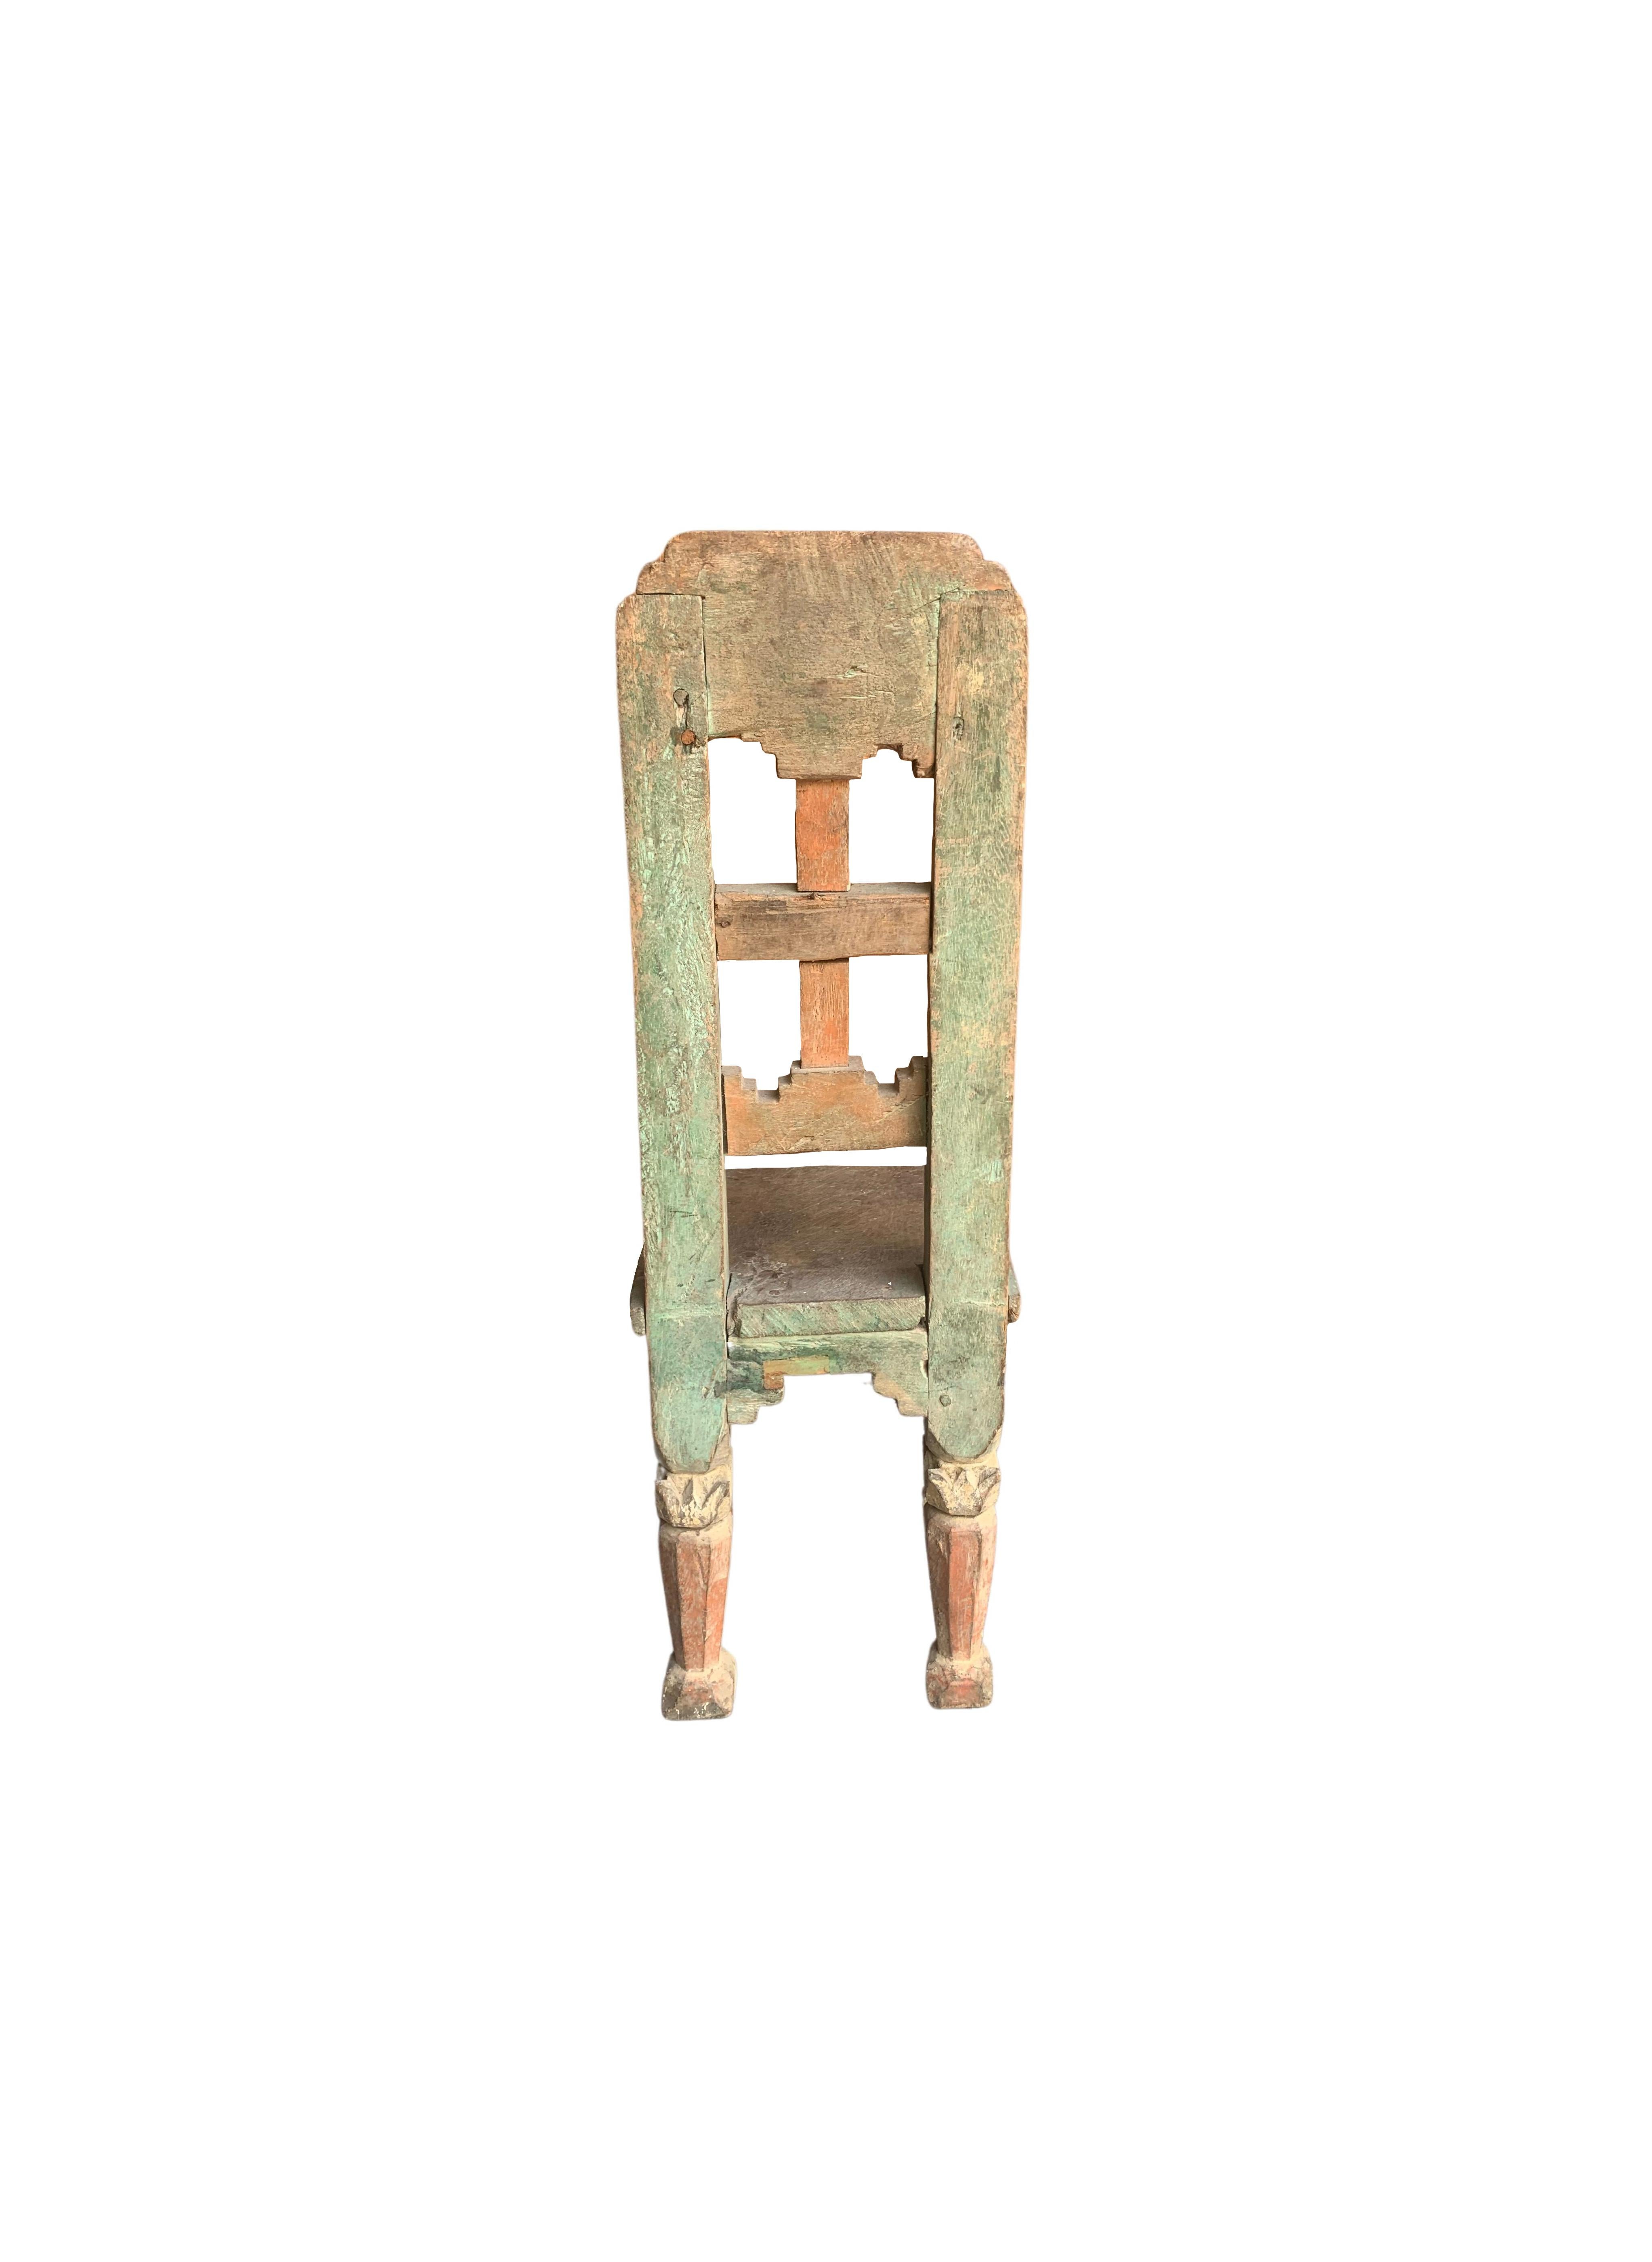 Mini-Stuhl aus Tabakplantagenholz, Java, Indonesien, um 1900 (Indonesisch) im Angebot